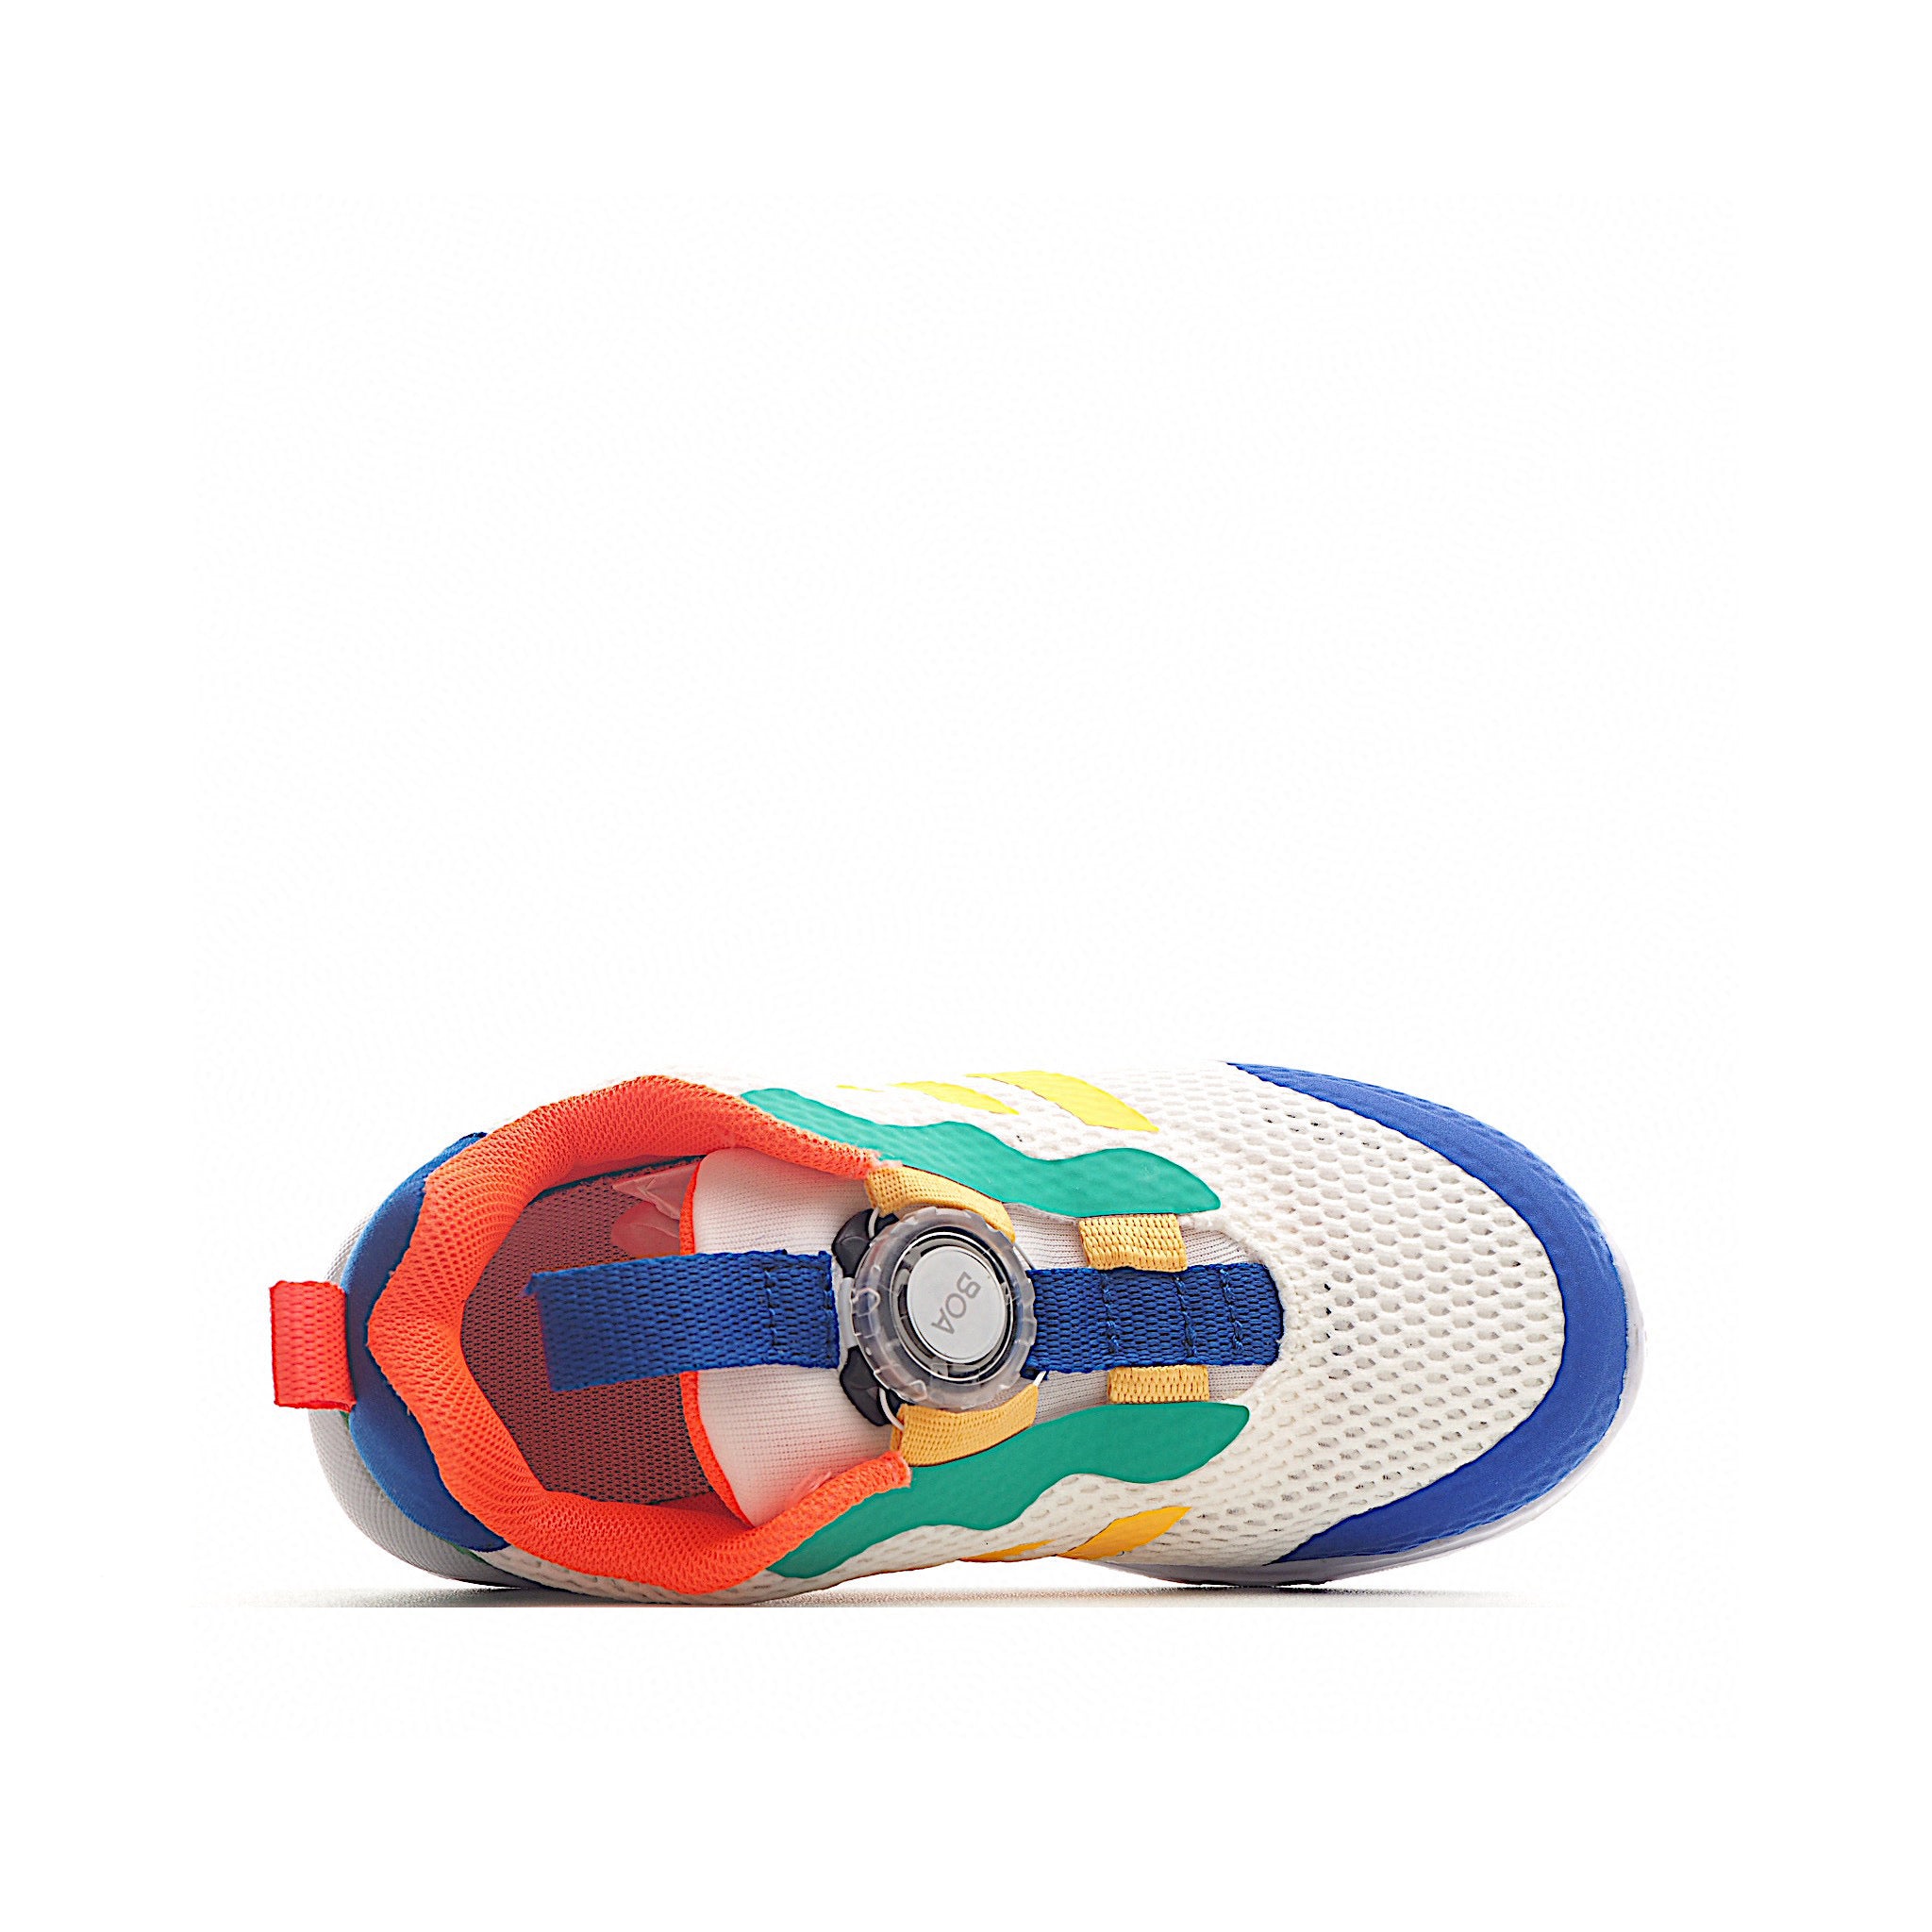 Adidas chaussures de course multicolores